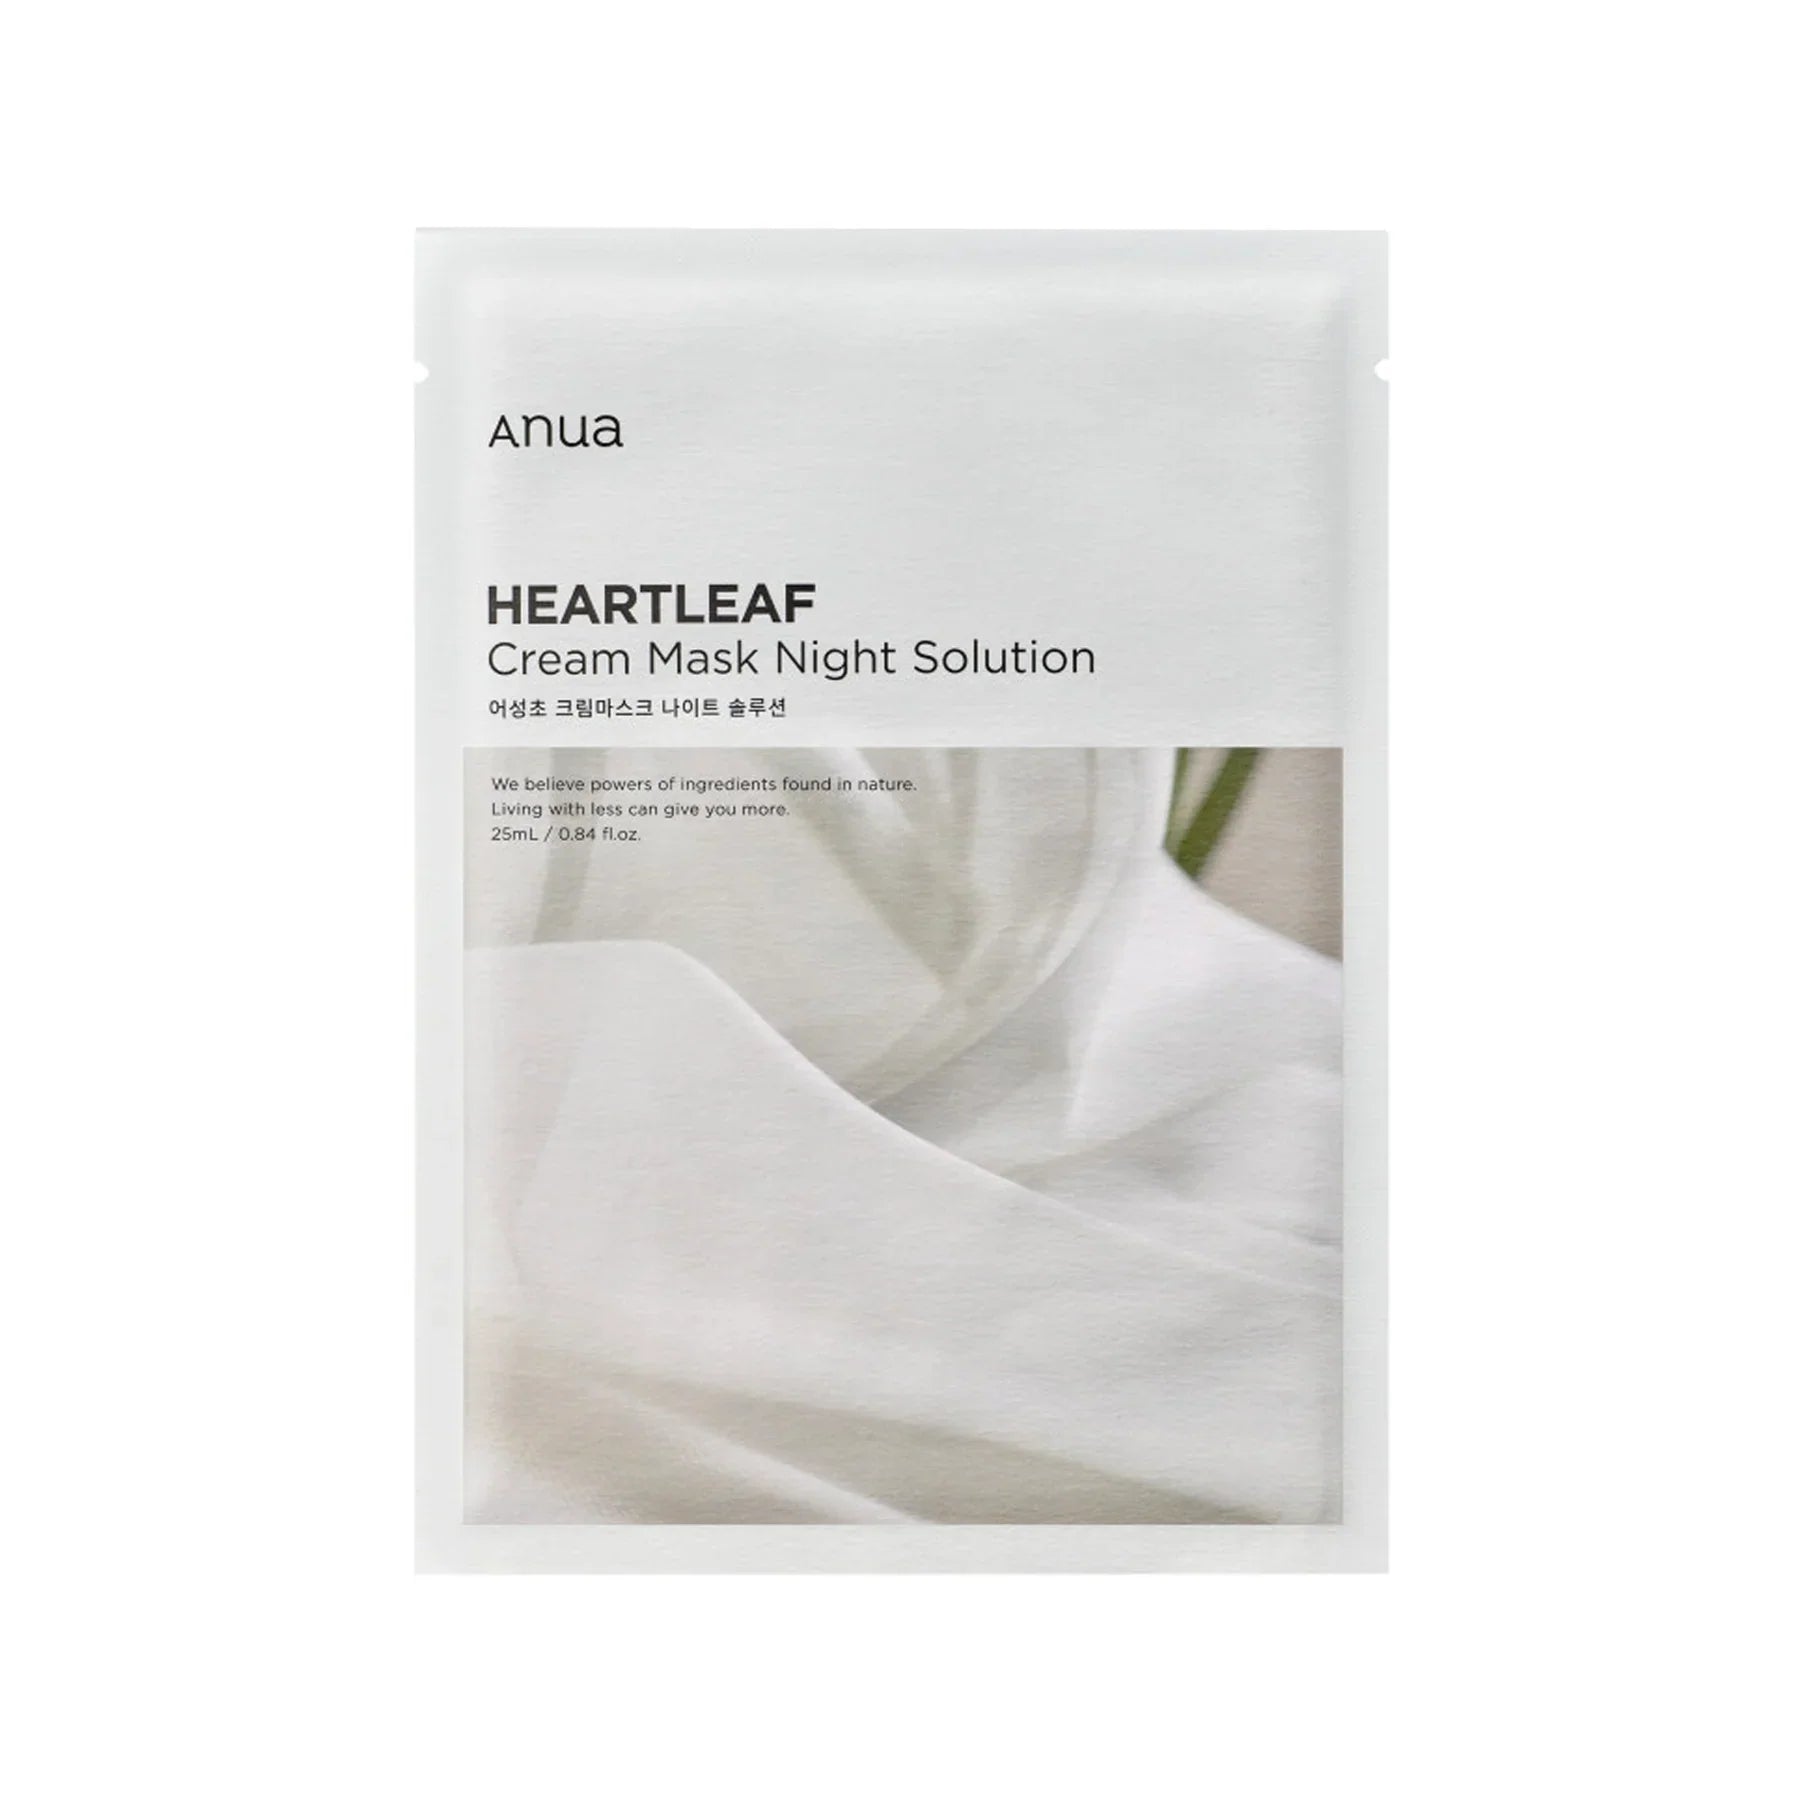 Anua - Heartleaf Cream Mask Night Solution